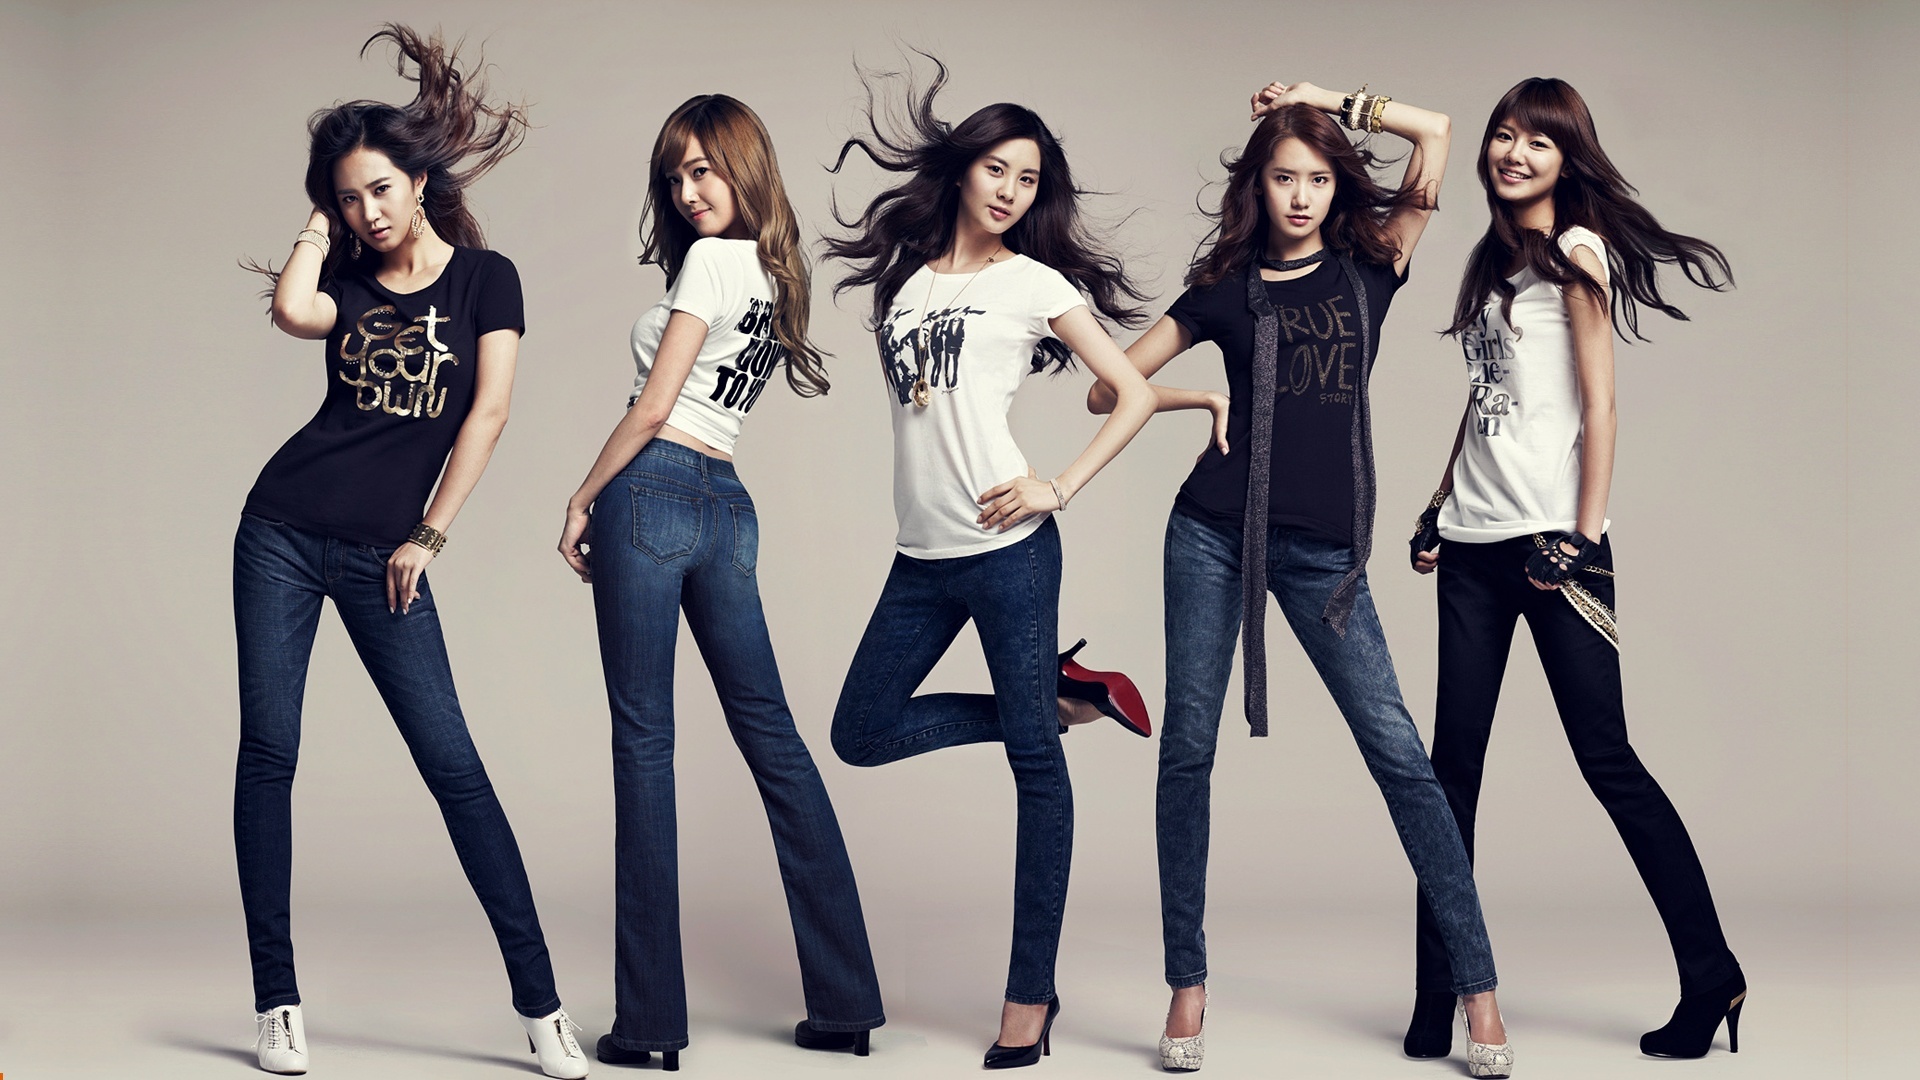 Fashion: Girls' Generation, Celebrities, A professional photoshoot. 1920x1080 Full HD Wallpaper.